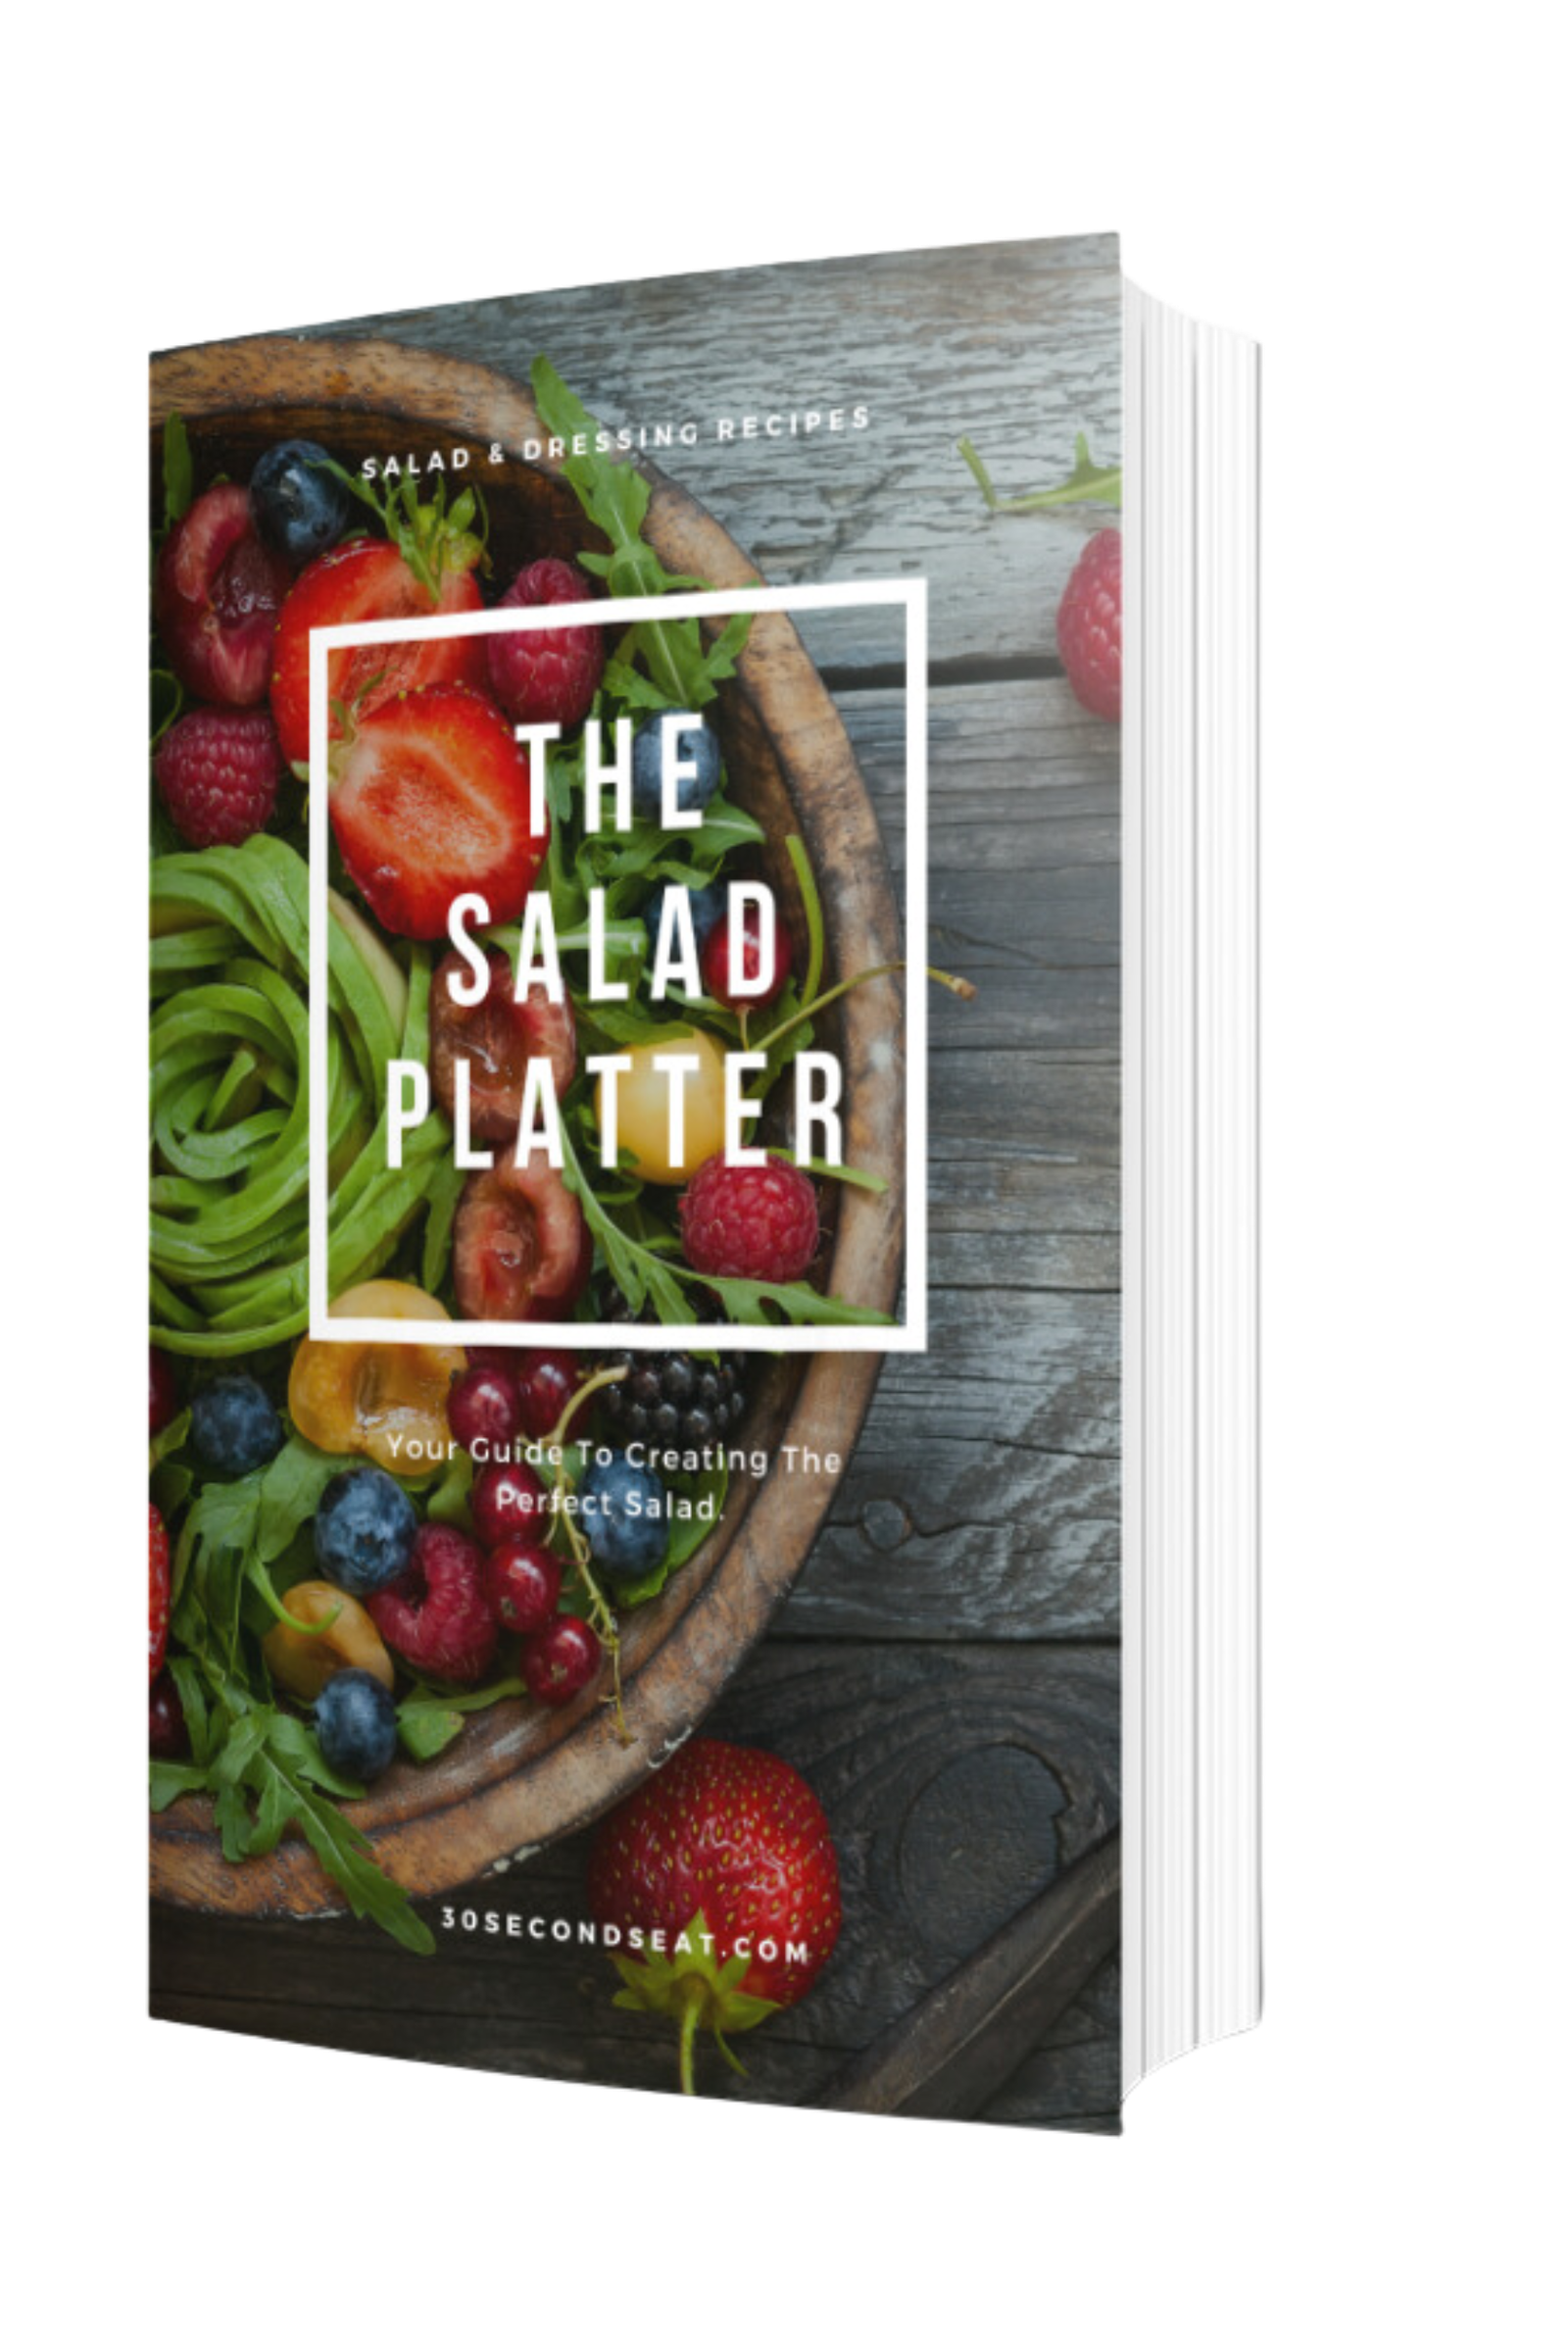 The Salad Platter Book Cover Mockup Image